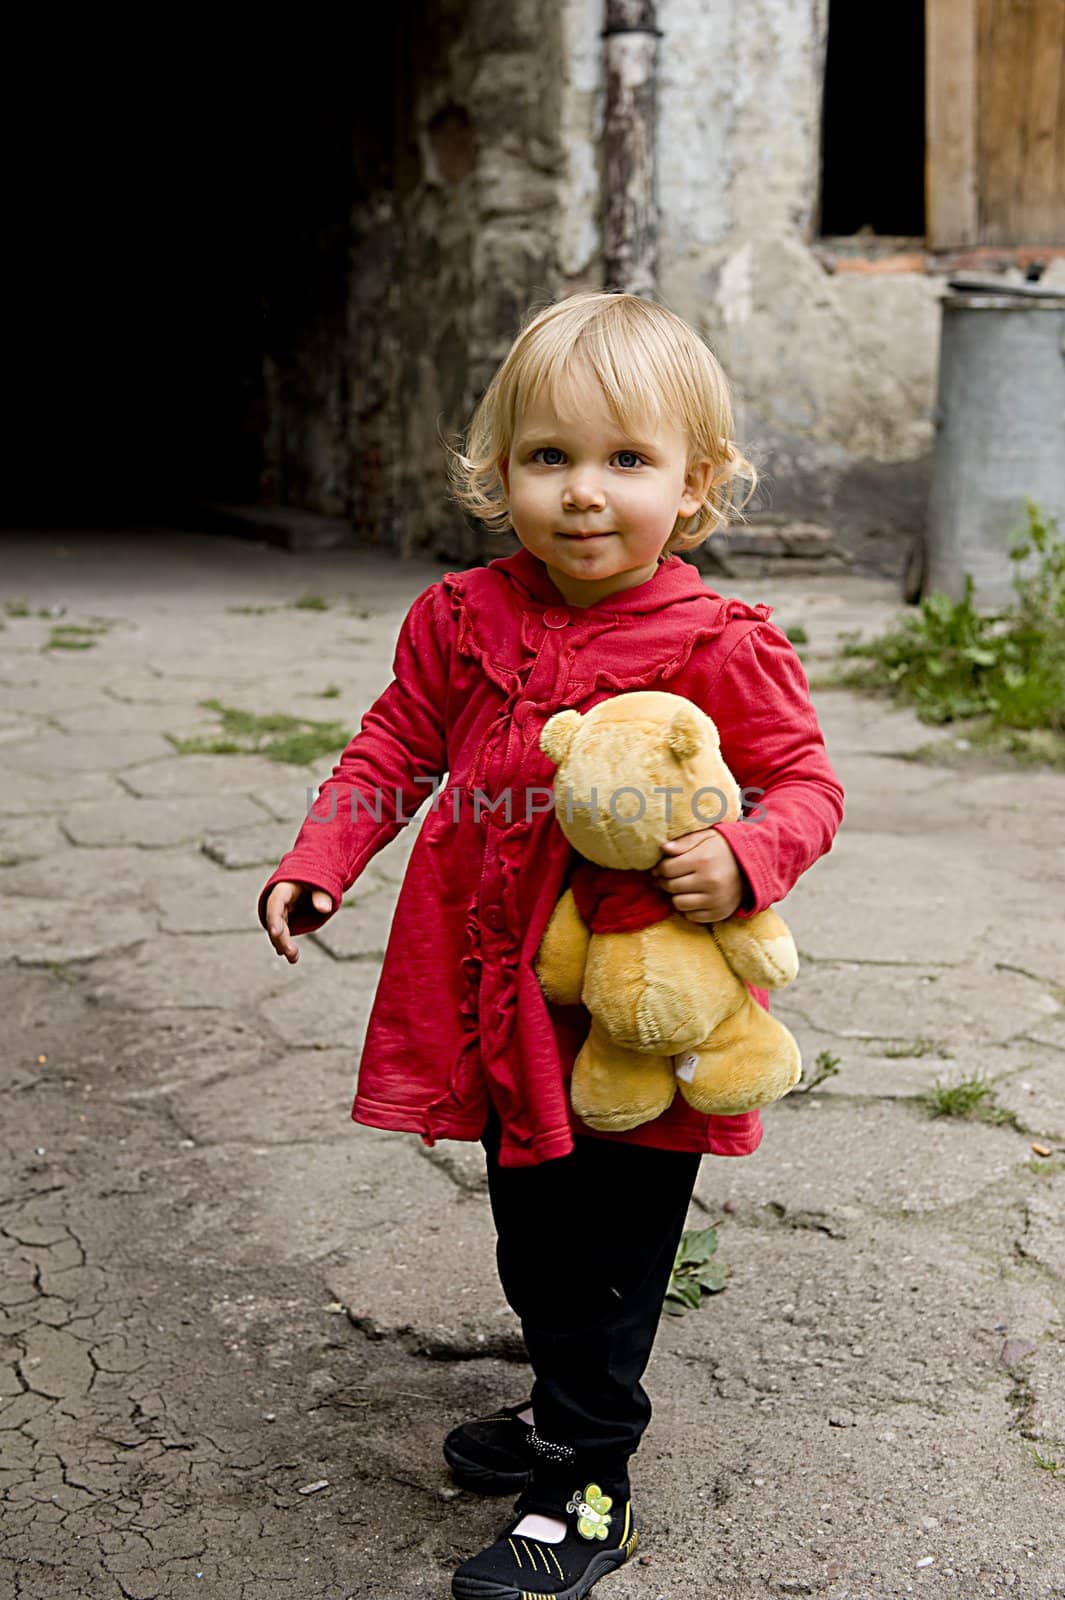 little girl holding teddy bear in the open air